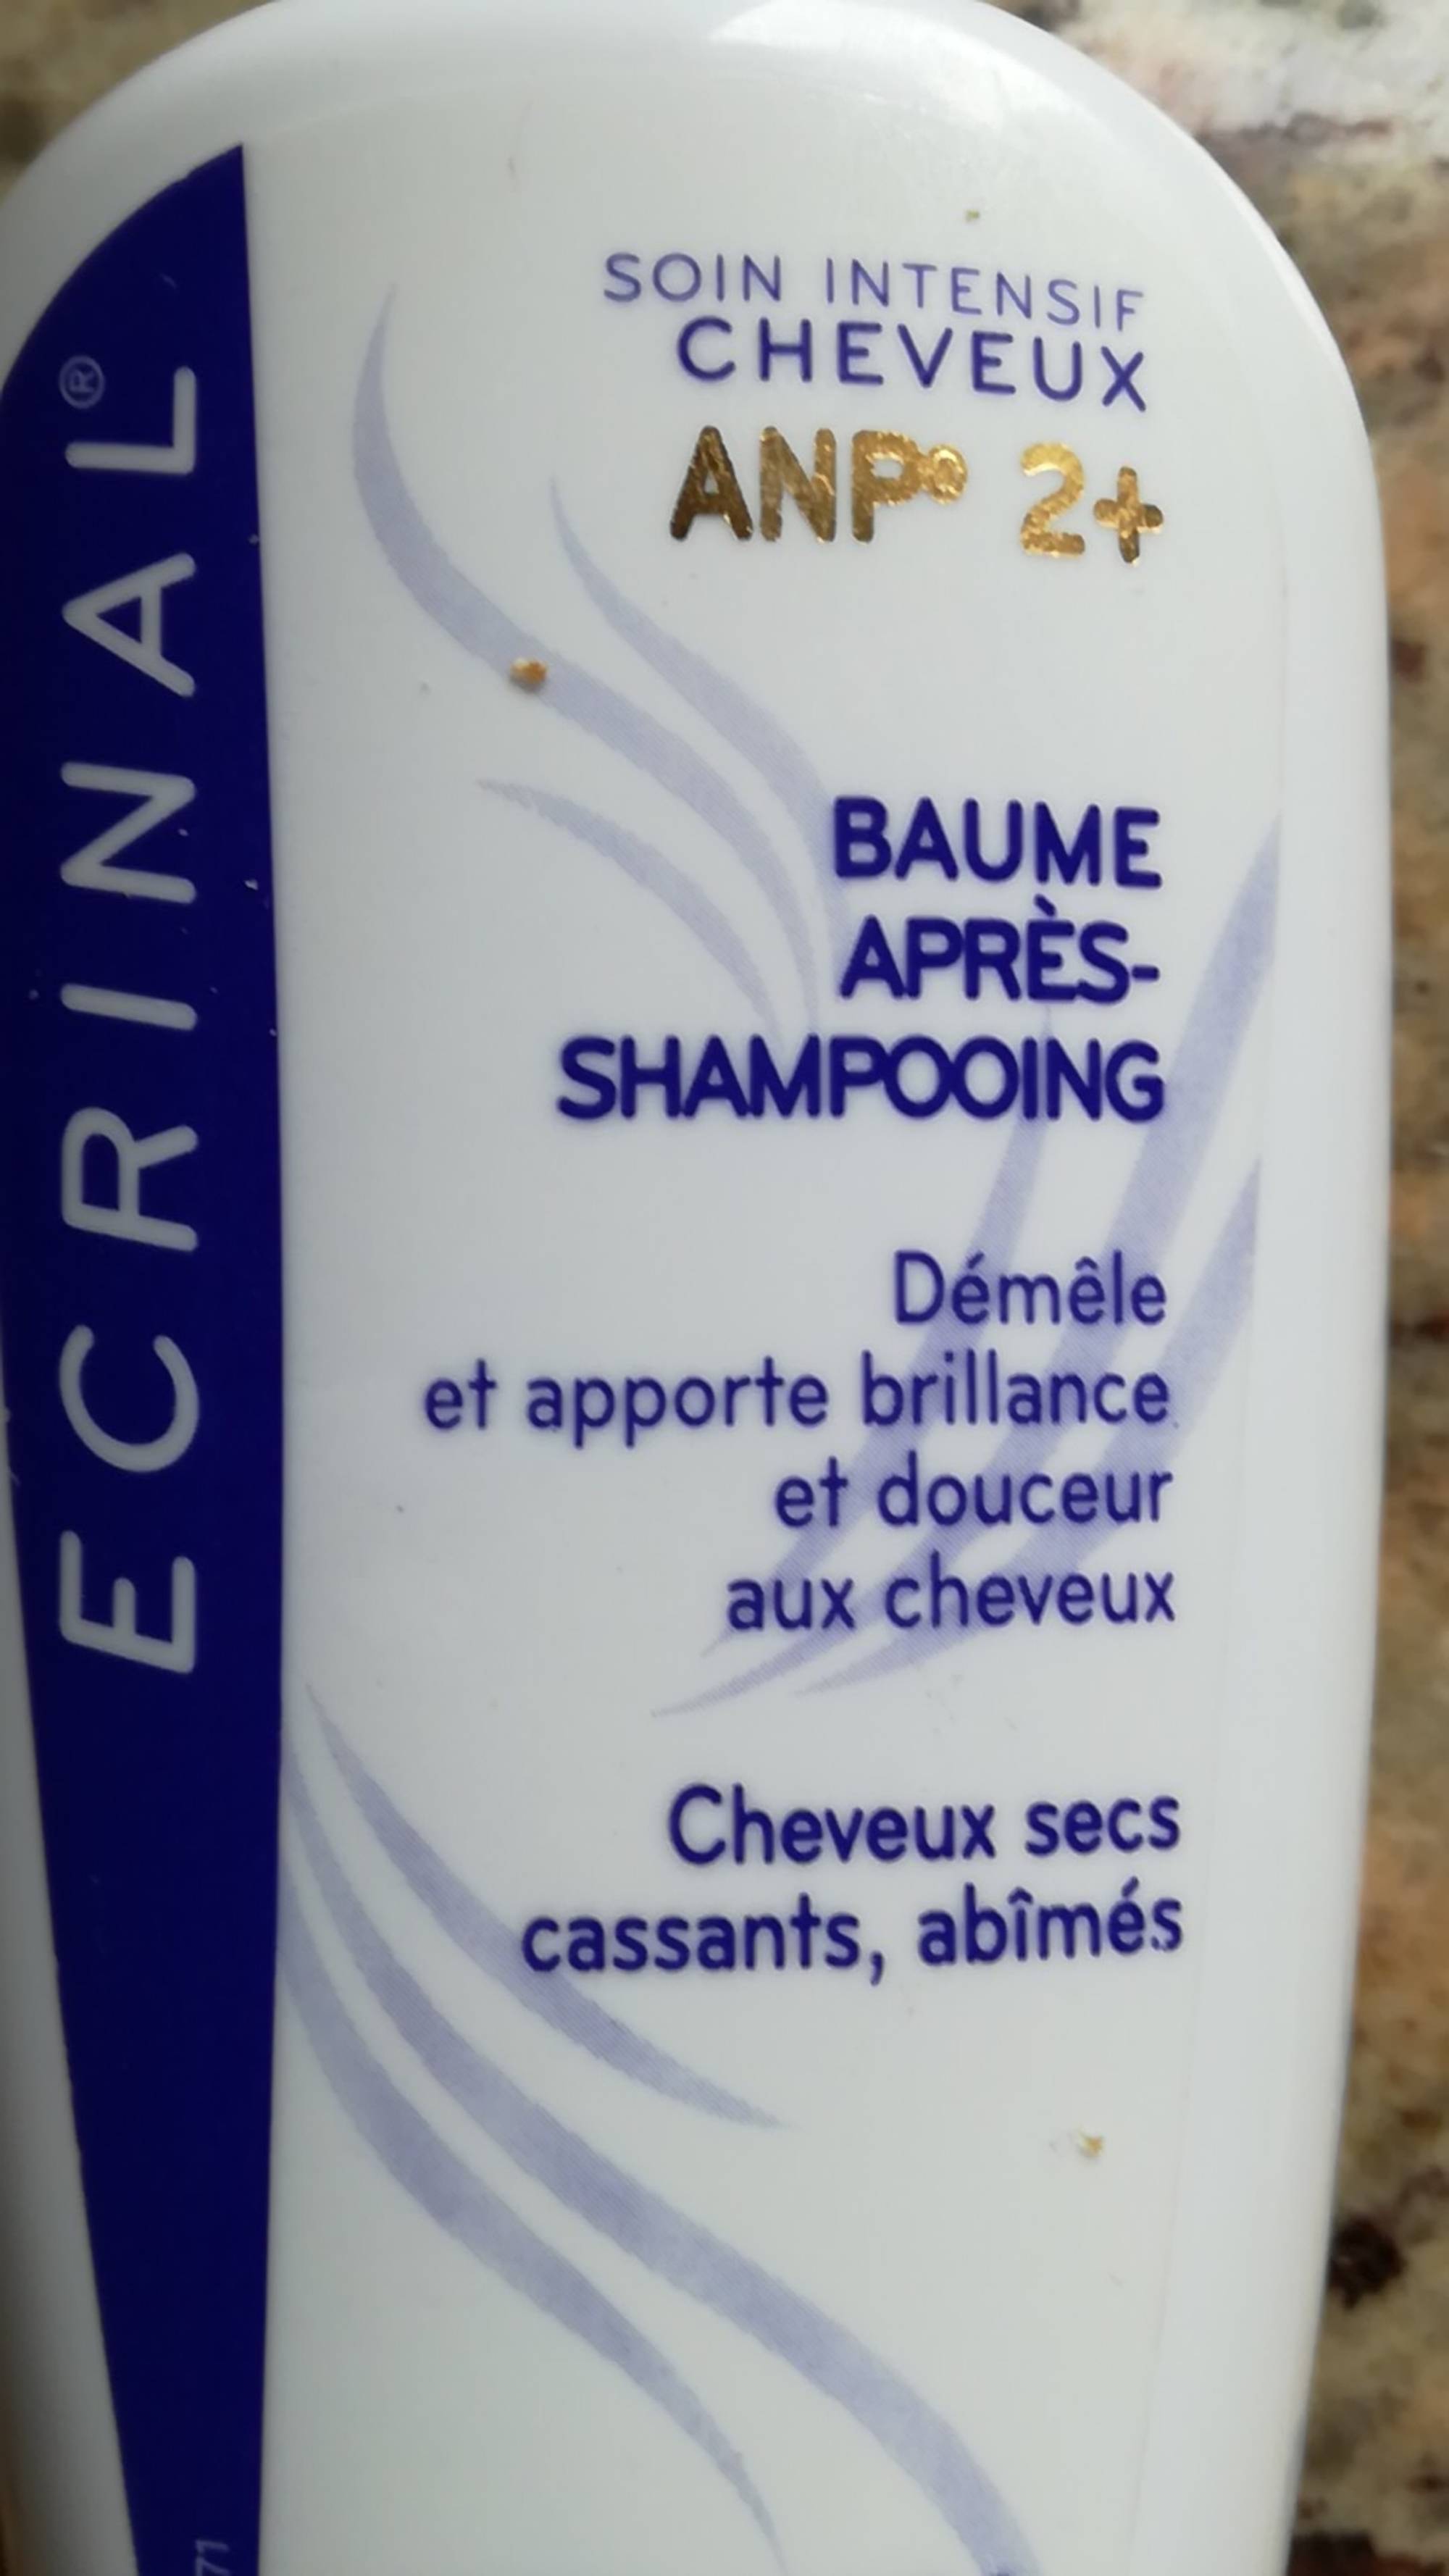 ECRINAL - ANP 2+ - Baume après-shampooing